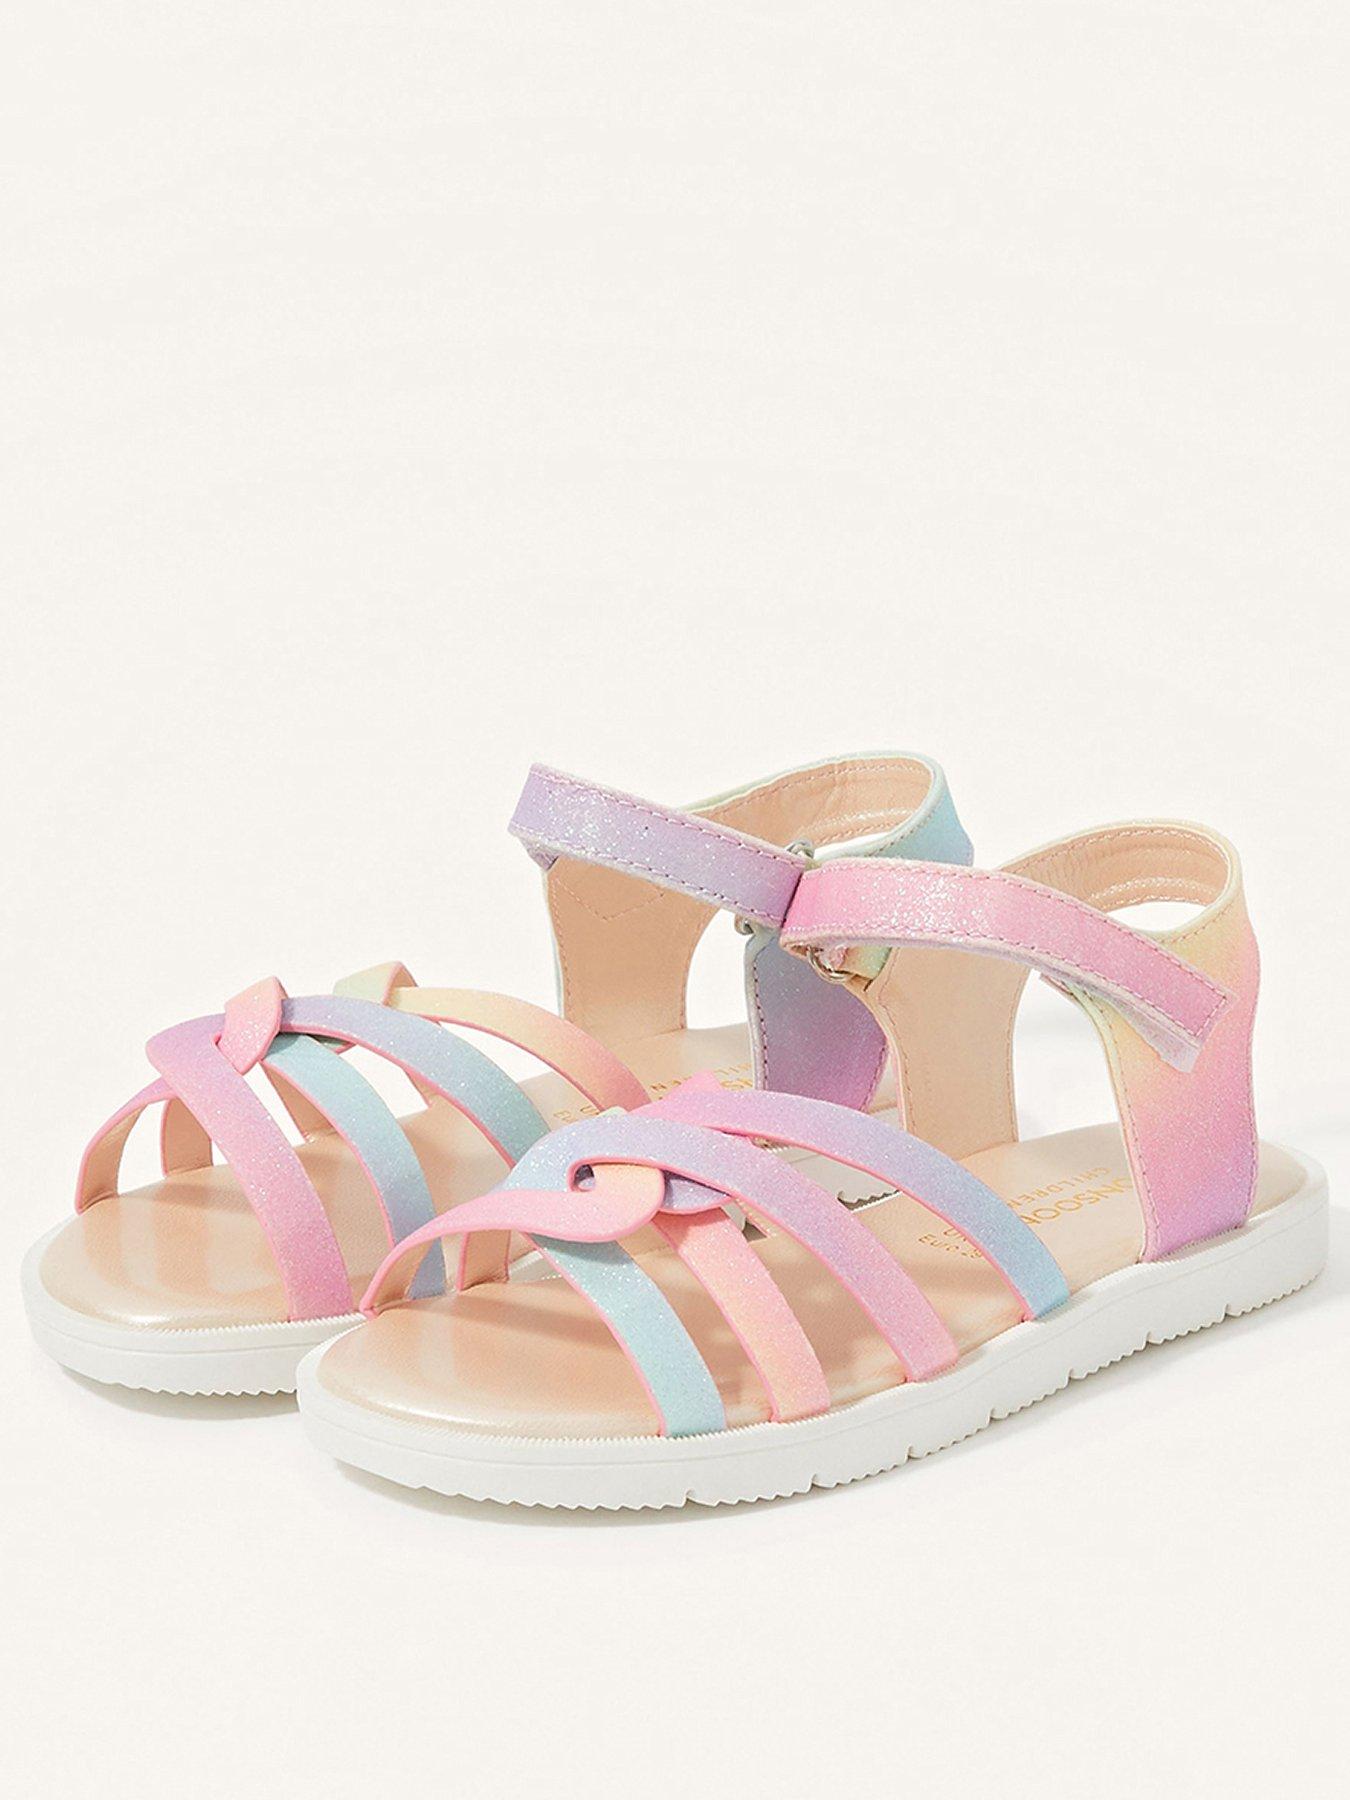  Girls Pastel Rainbow Shimmer Sandals - Multi